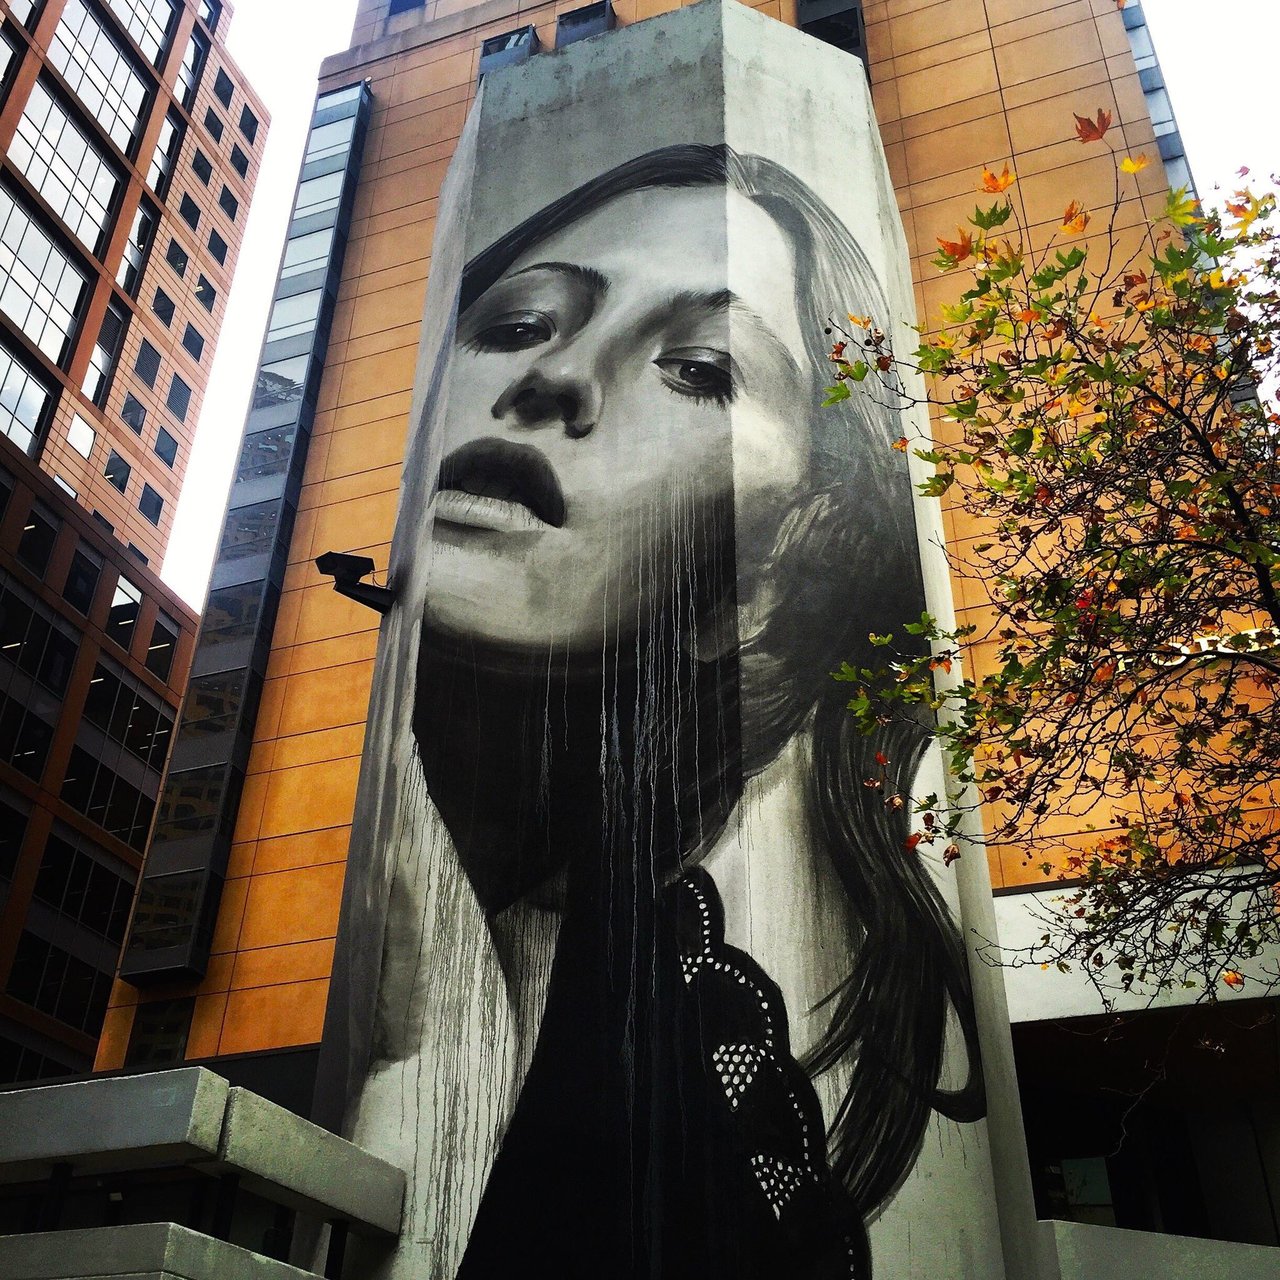 #Mural by Rone #Melbourne, #Australia #Streetart #urbanart #graffiti #art https://t.co/6nmO95caEE